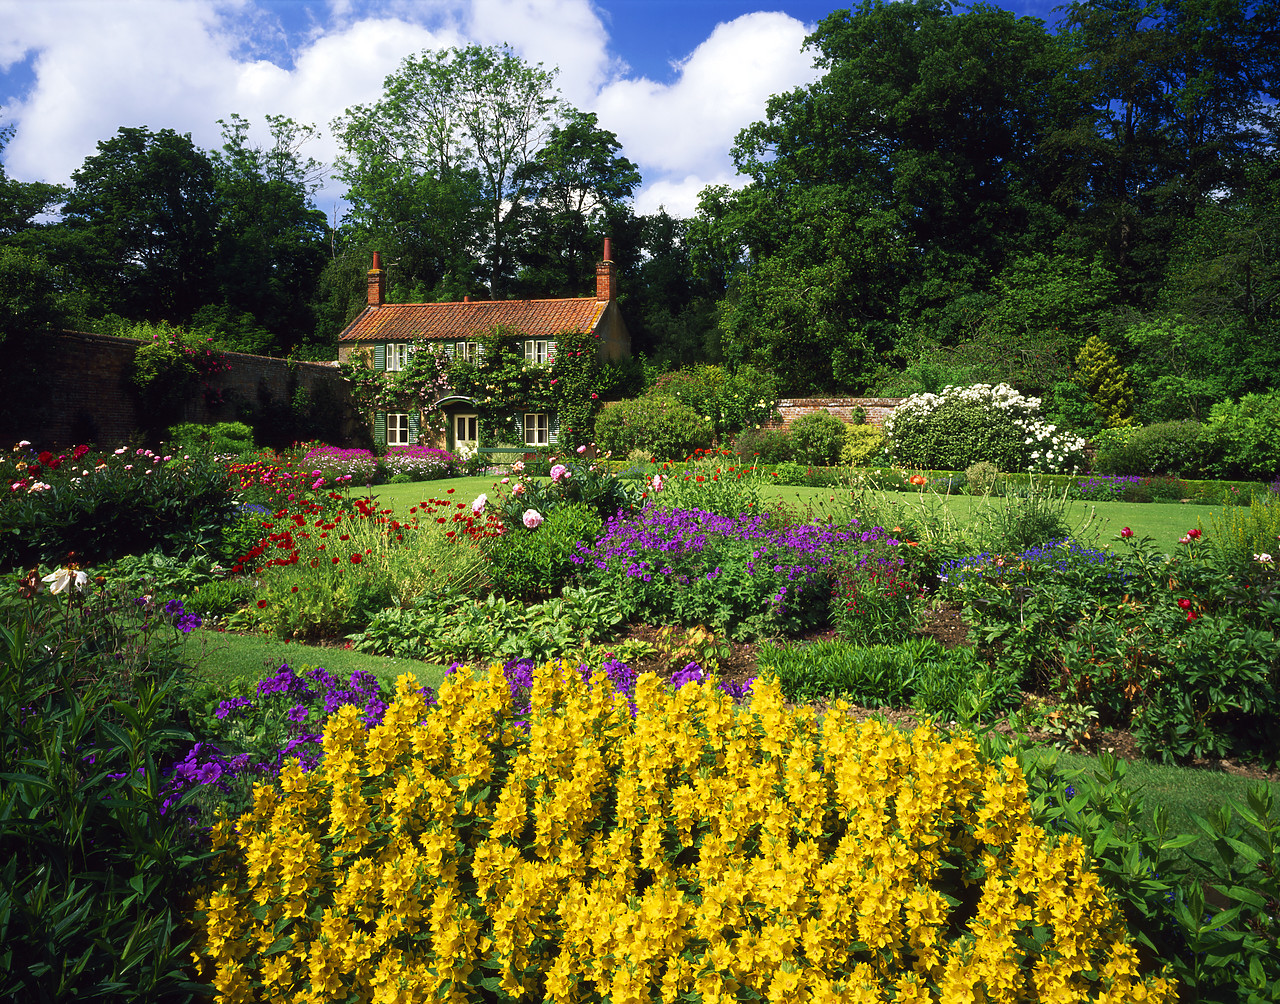 #970220-4 - Gardener's Cottage, Hovetone Hall Gardens, Norfolk, England